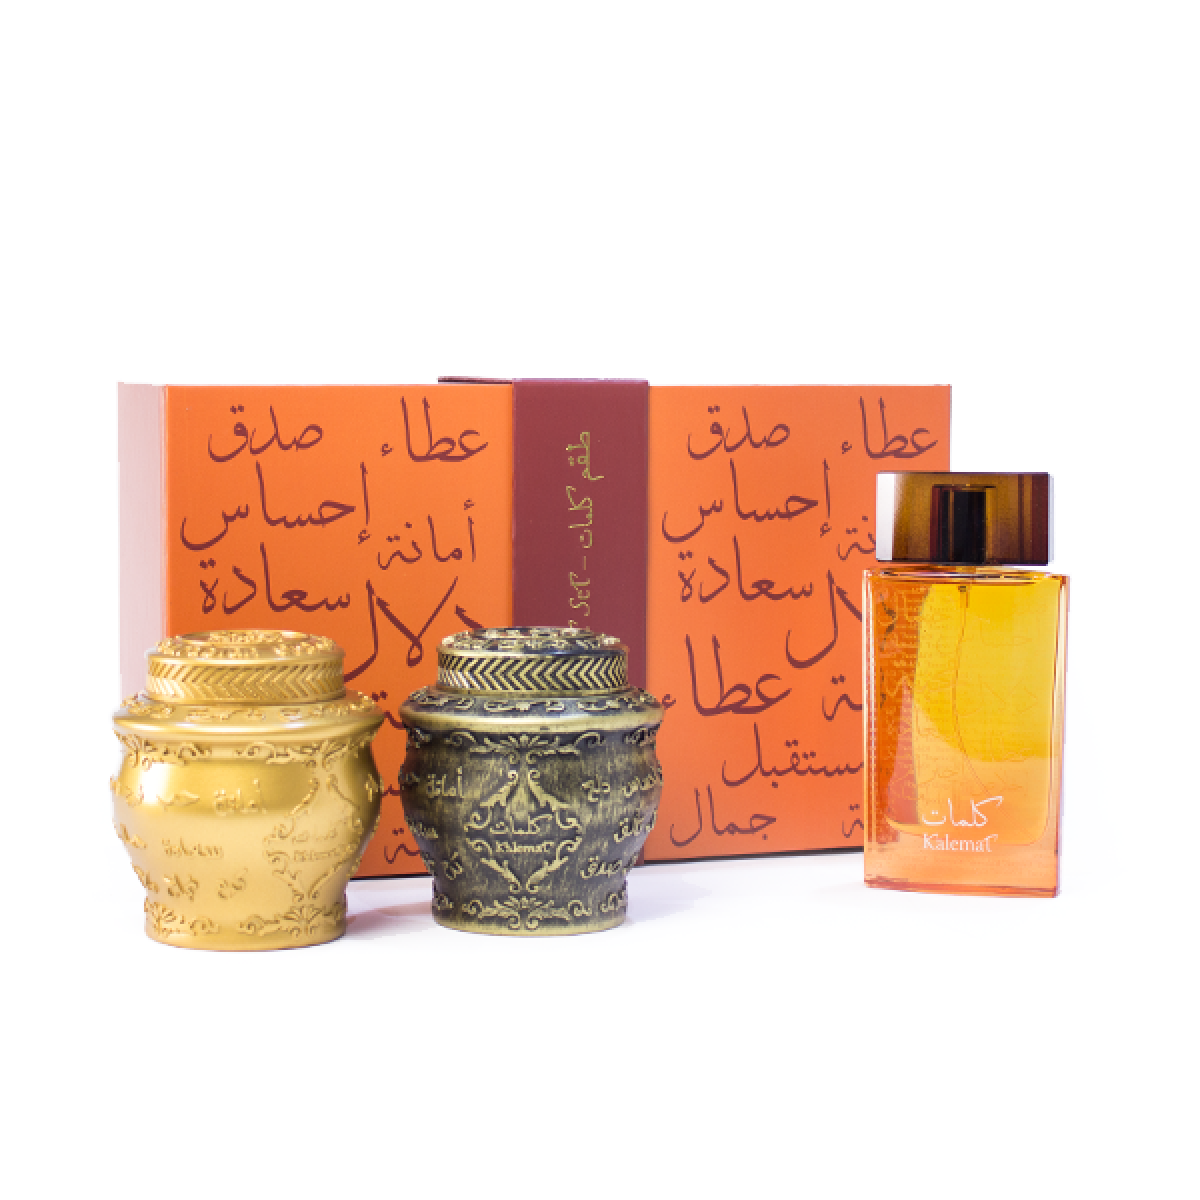 Kalemat Gift Set by Arabian Oud - Intense oud